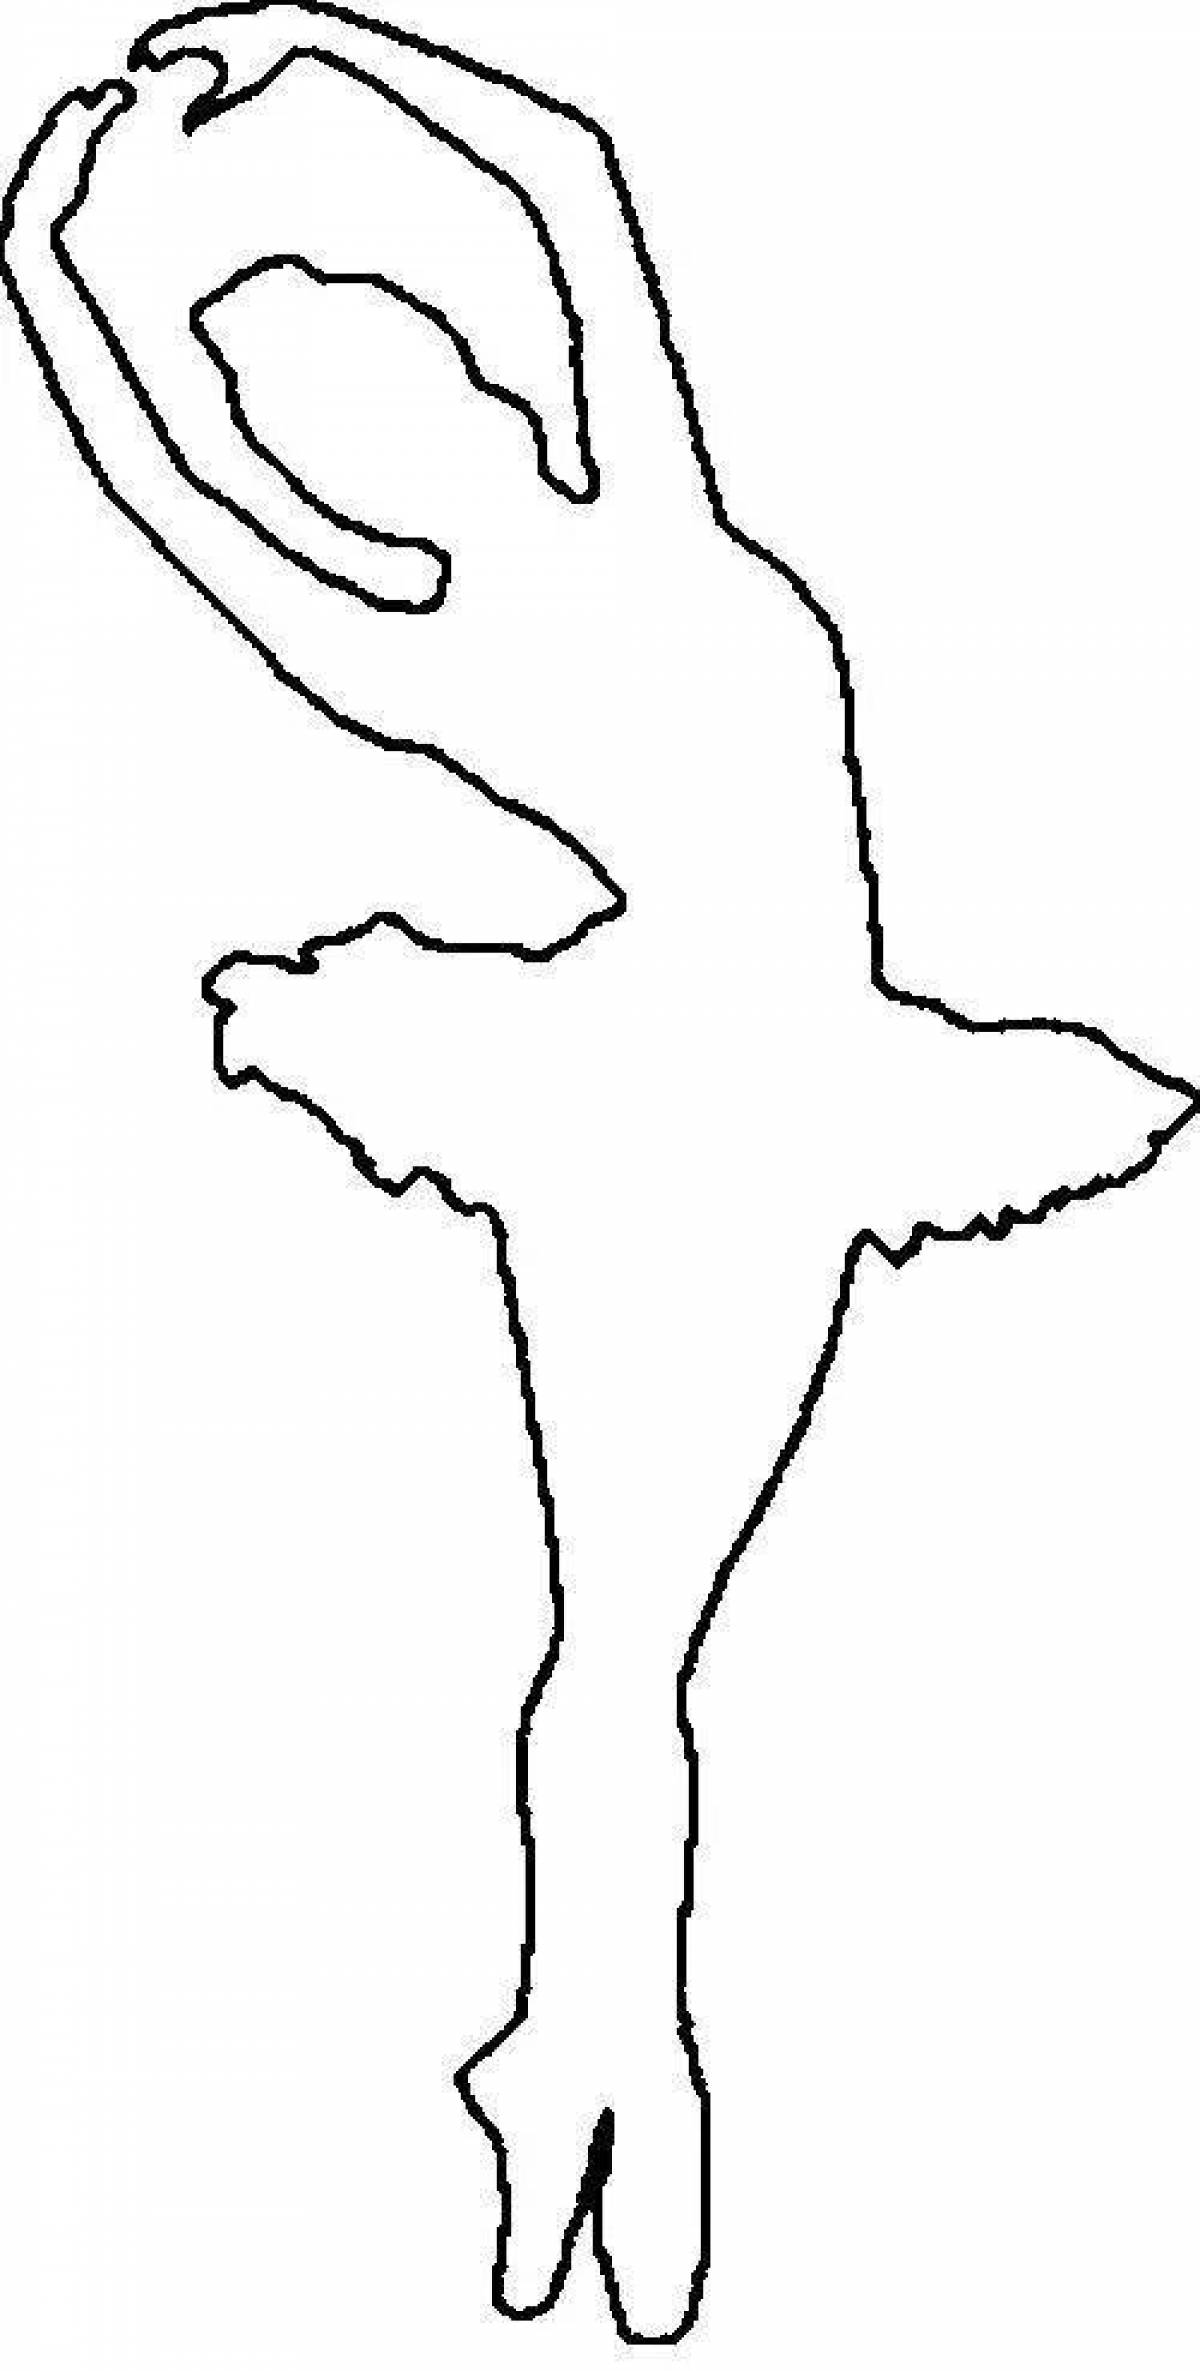 Coloring page attractive ballerina silhouette